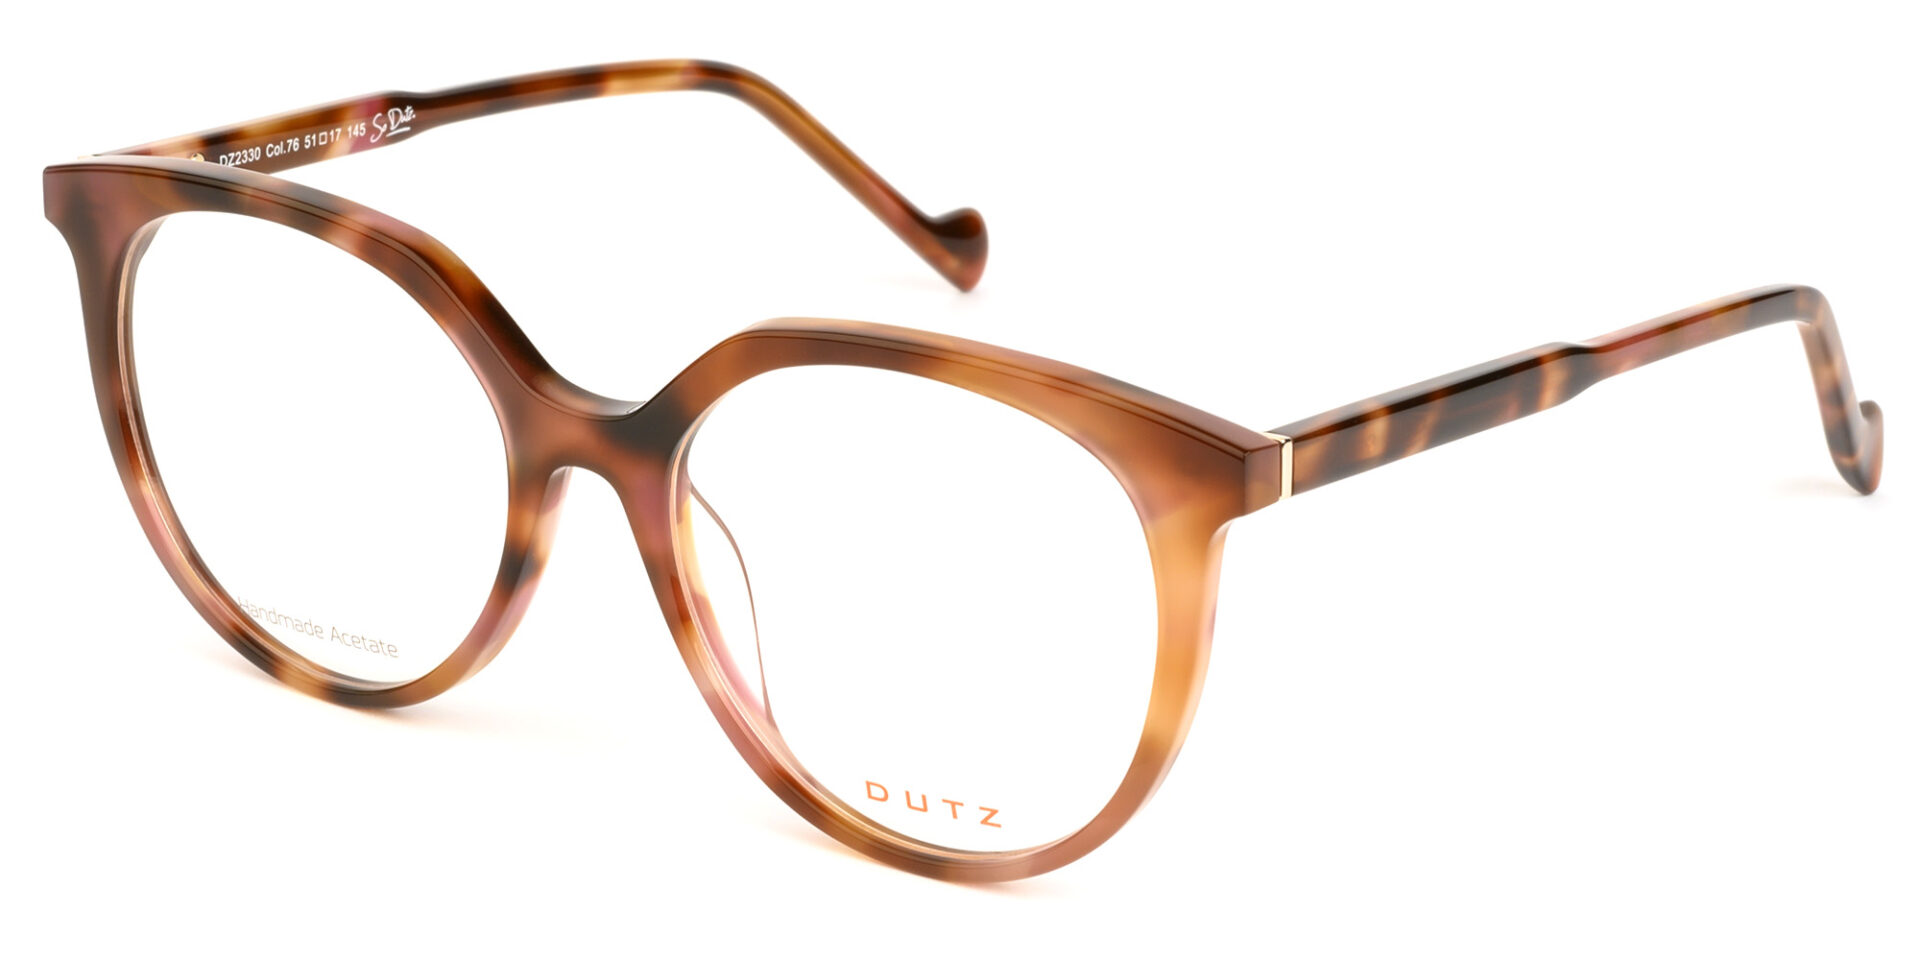 DZ2330 (51-17/145) - Dutz Eyewear